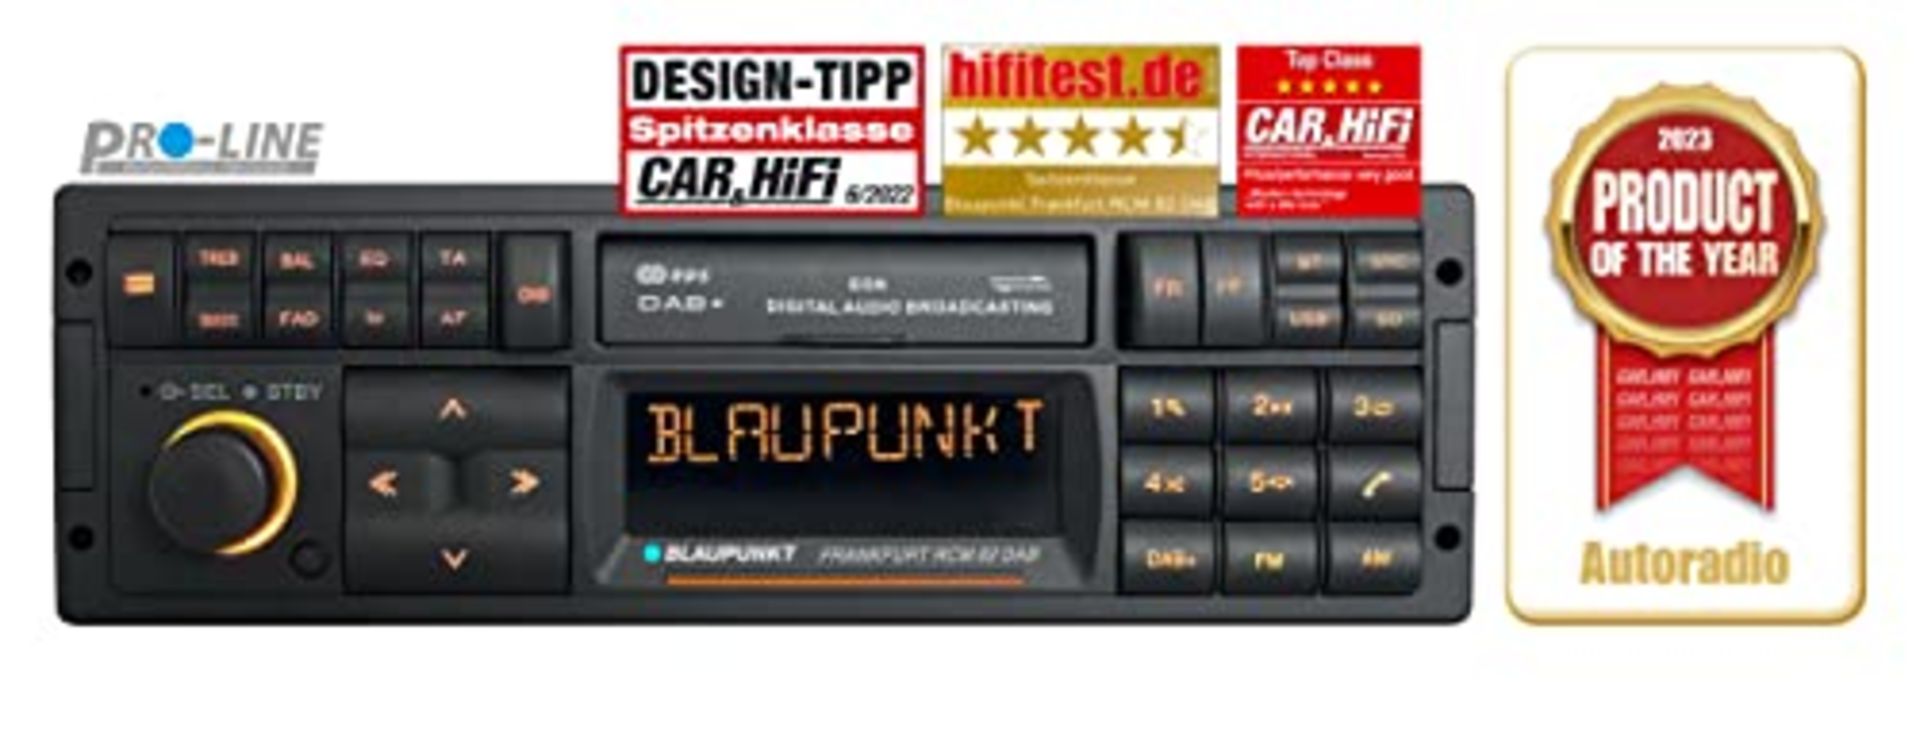 RRP £399.00 Blaupunkt Frankfurt RCM 82 DAB, 1-DIN car radio, DAB+, Bluetooth, AUX; USB, SD card in